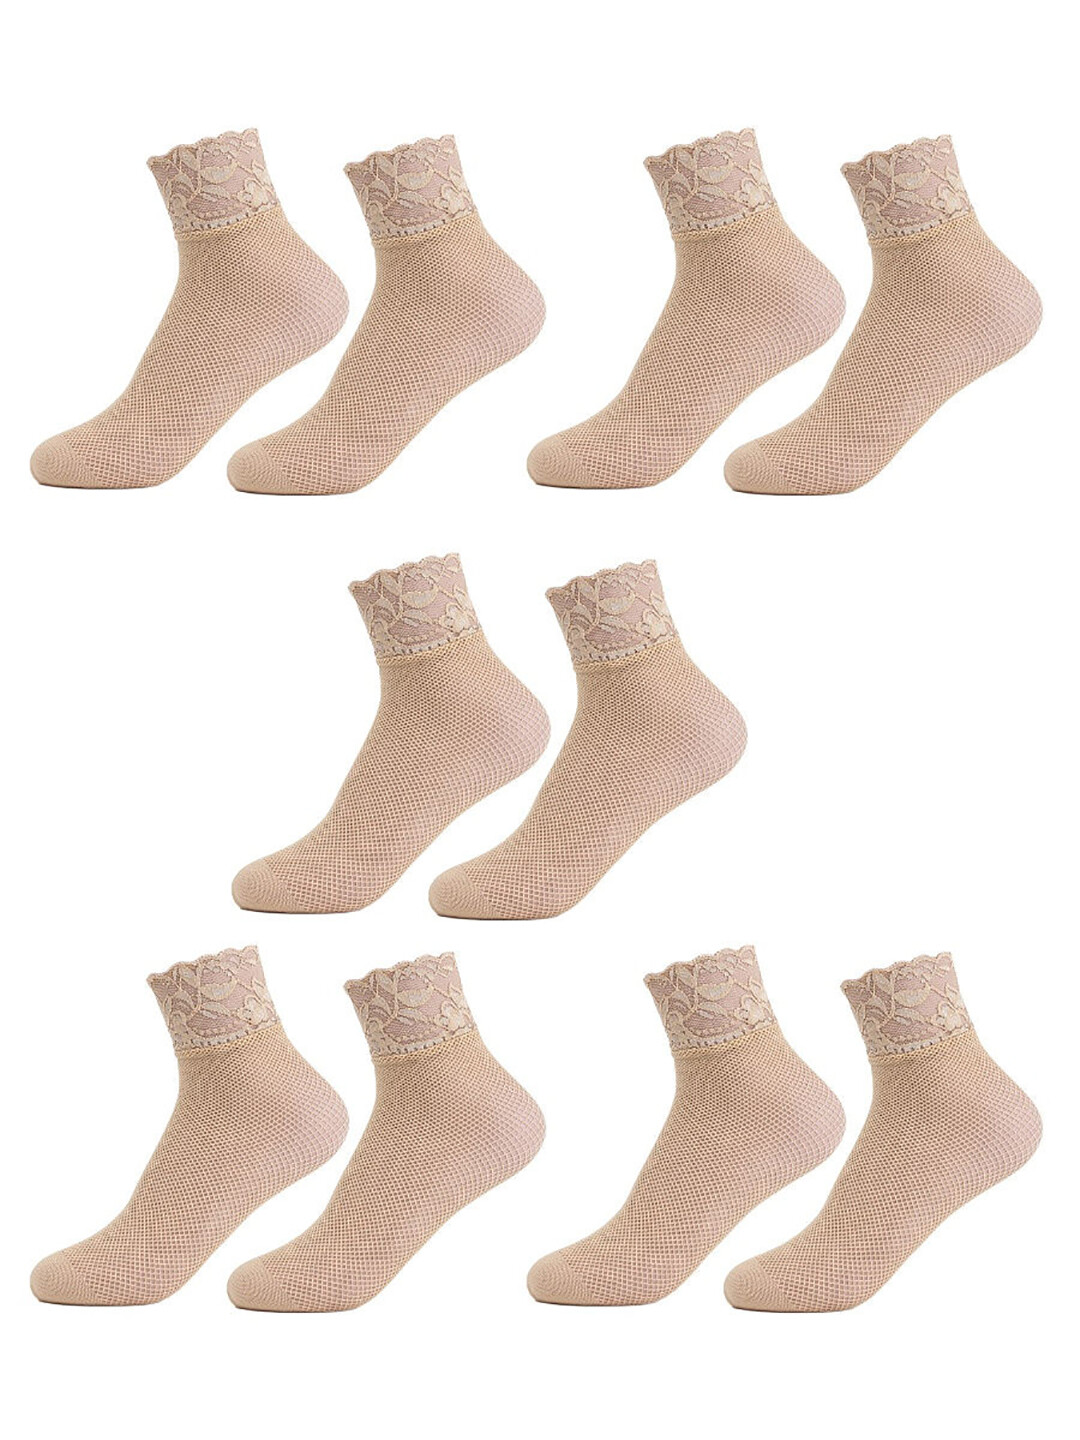 фото Комплект носков женских лариса бежевых